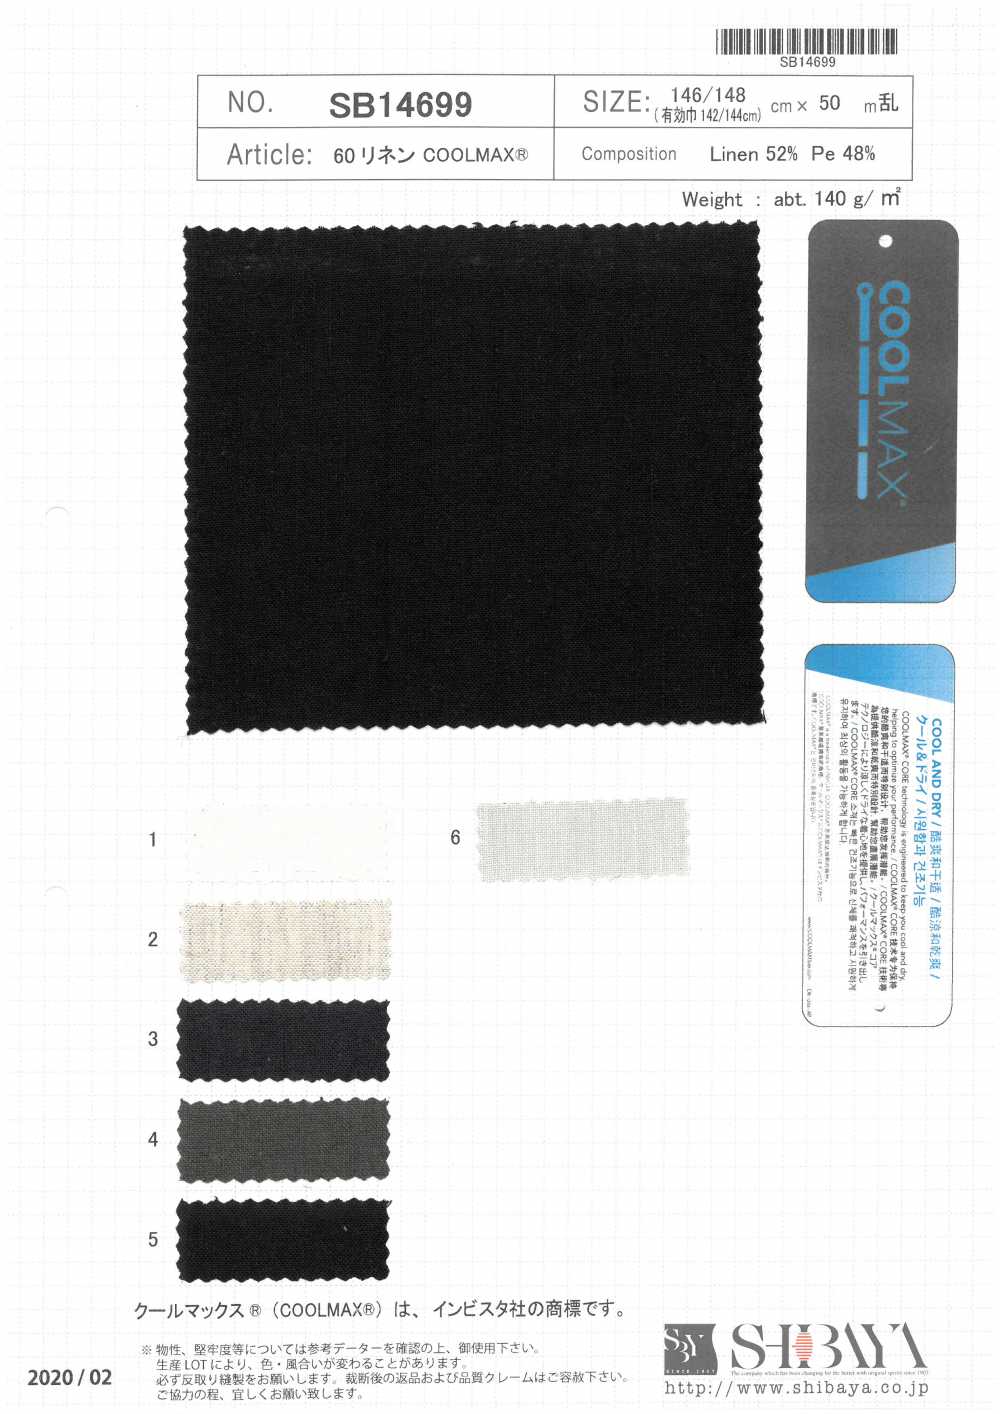 SB14699 60 Linen COOLMAX(R)[Textile / Fabric] SHIBAYA